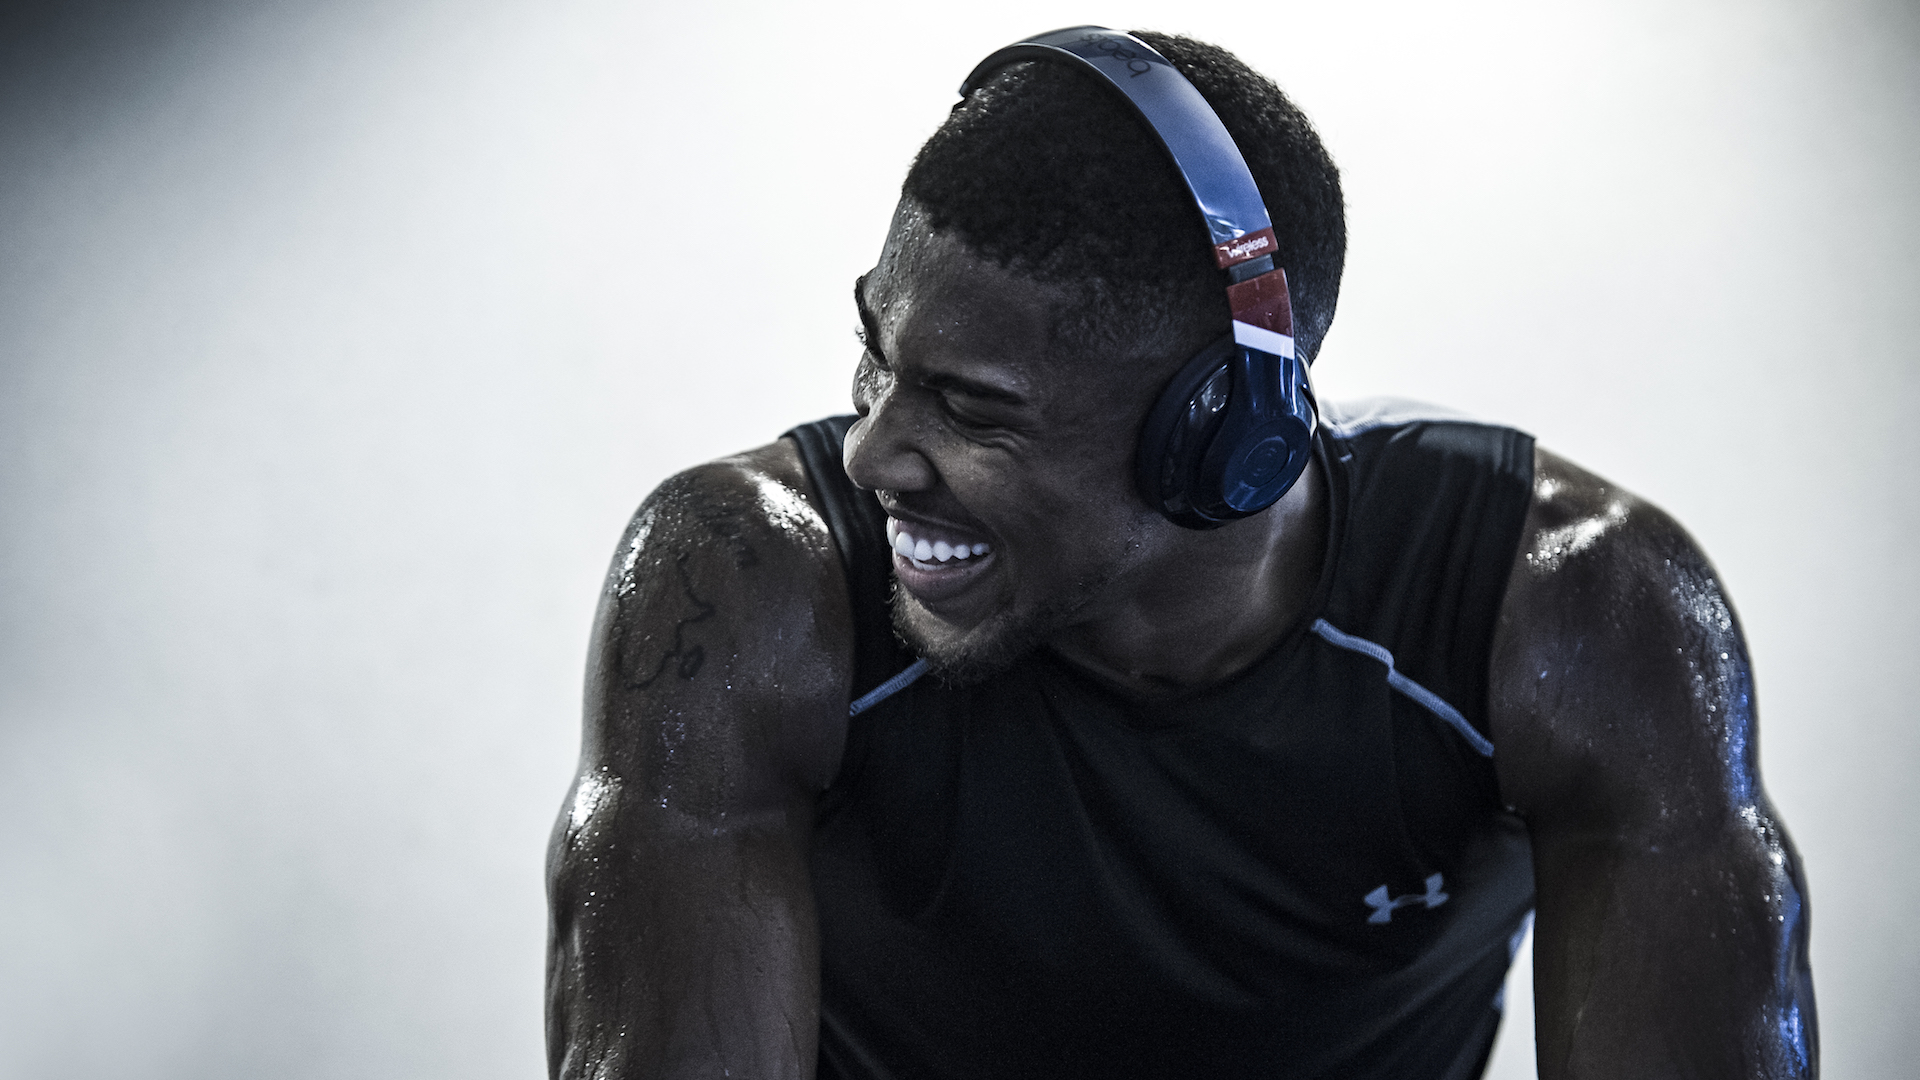 Anthony Joshua headphones by sports photographer Stuart Manley